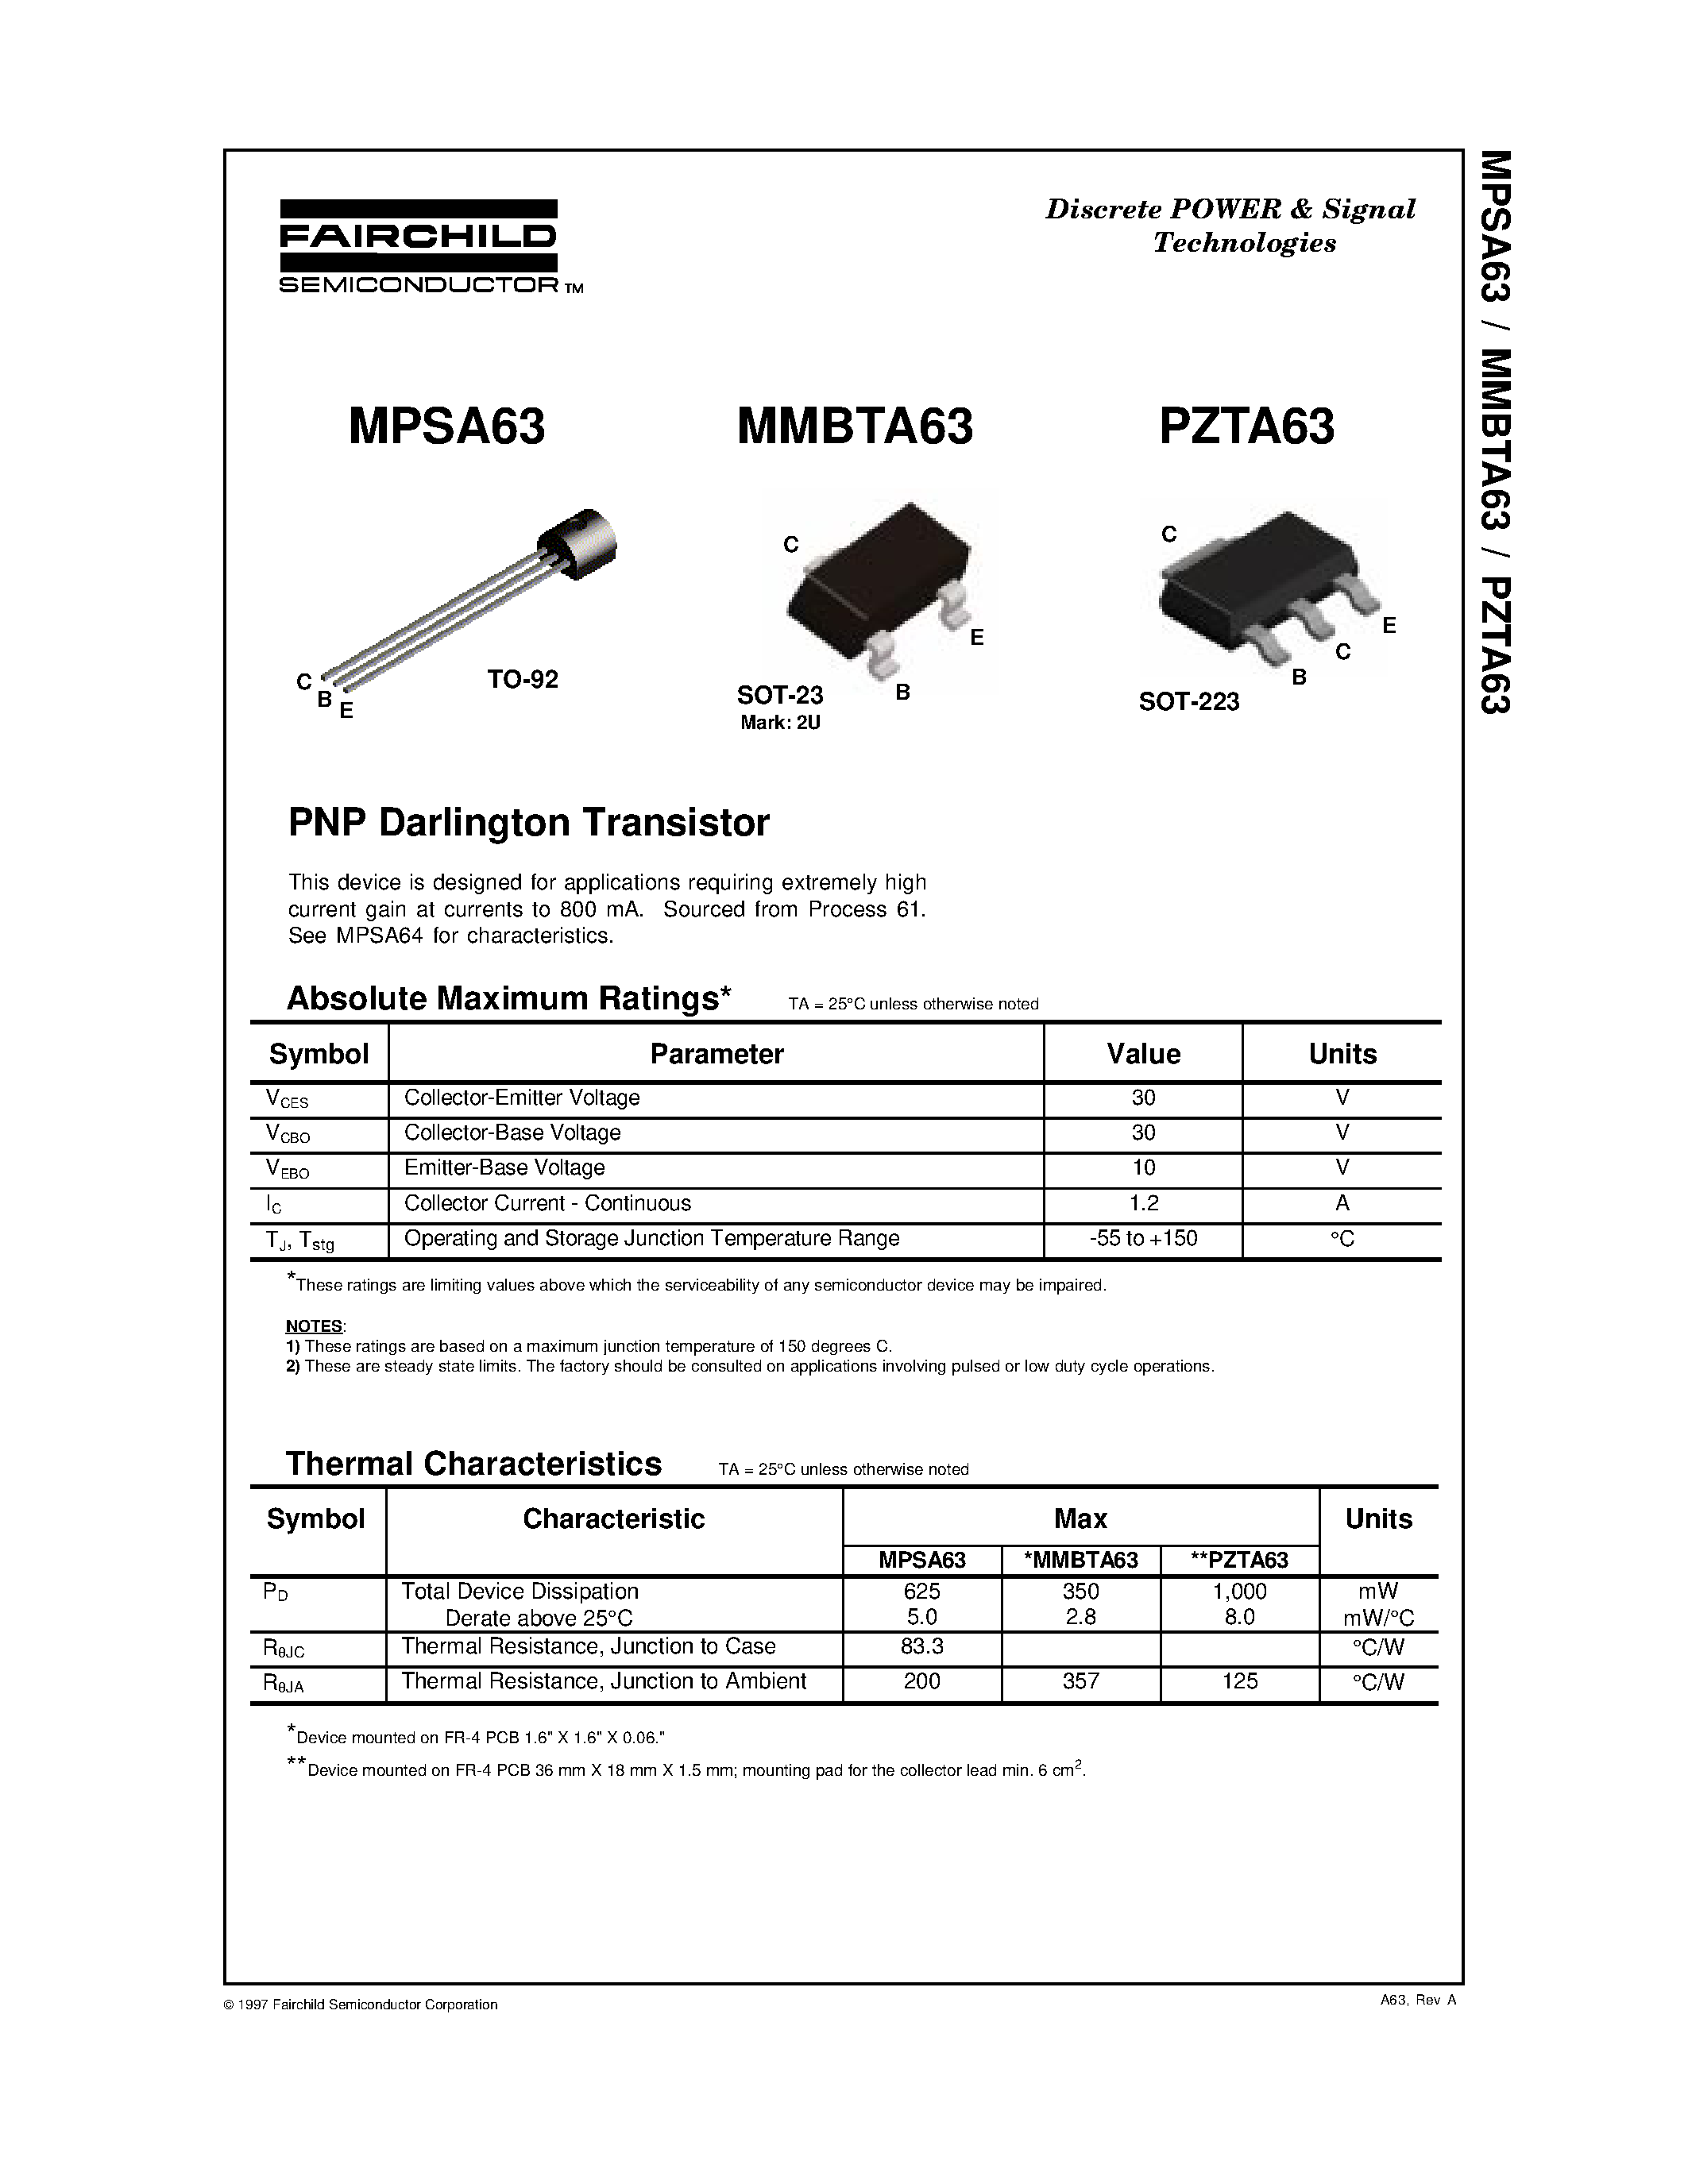 Datasheet PZTA63 - PNP Darlington Transistor page 1